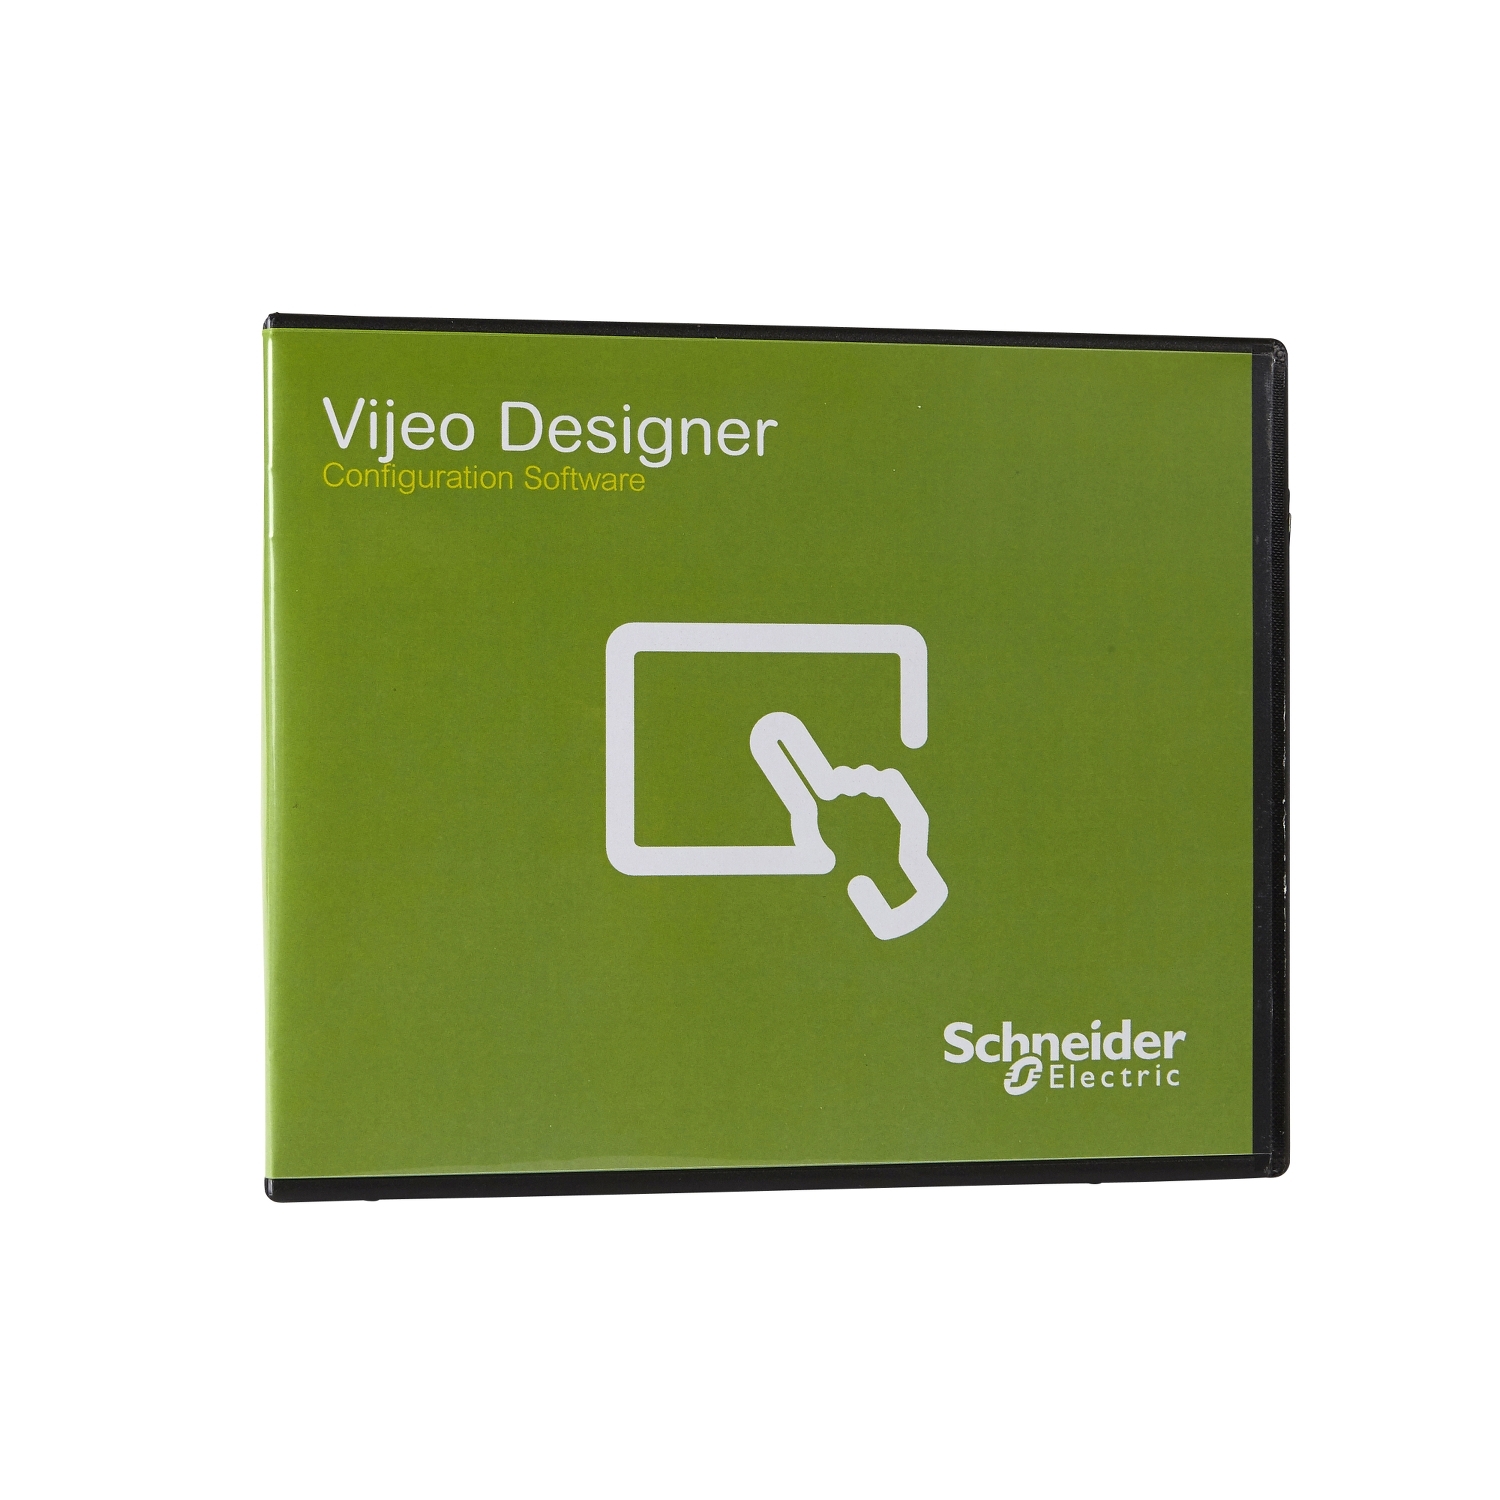 Vijeo Designer 6.2, HMI configuration software single license